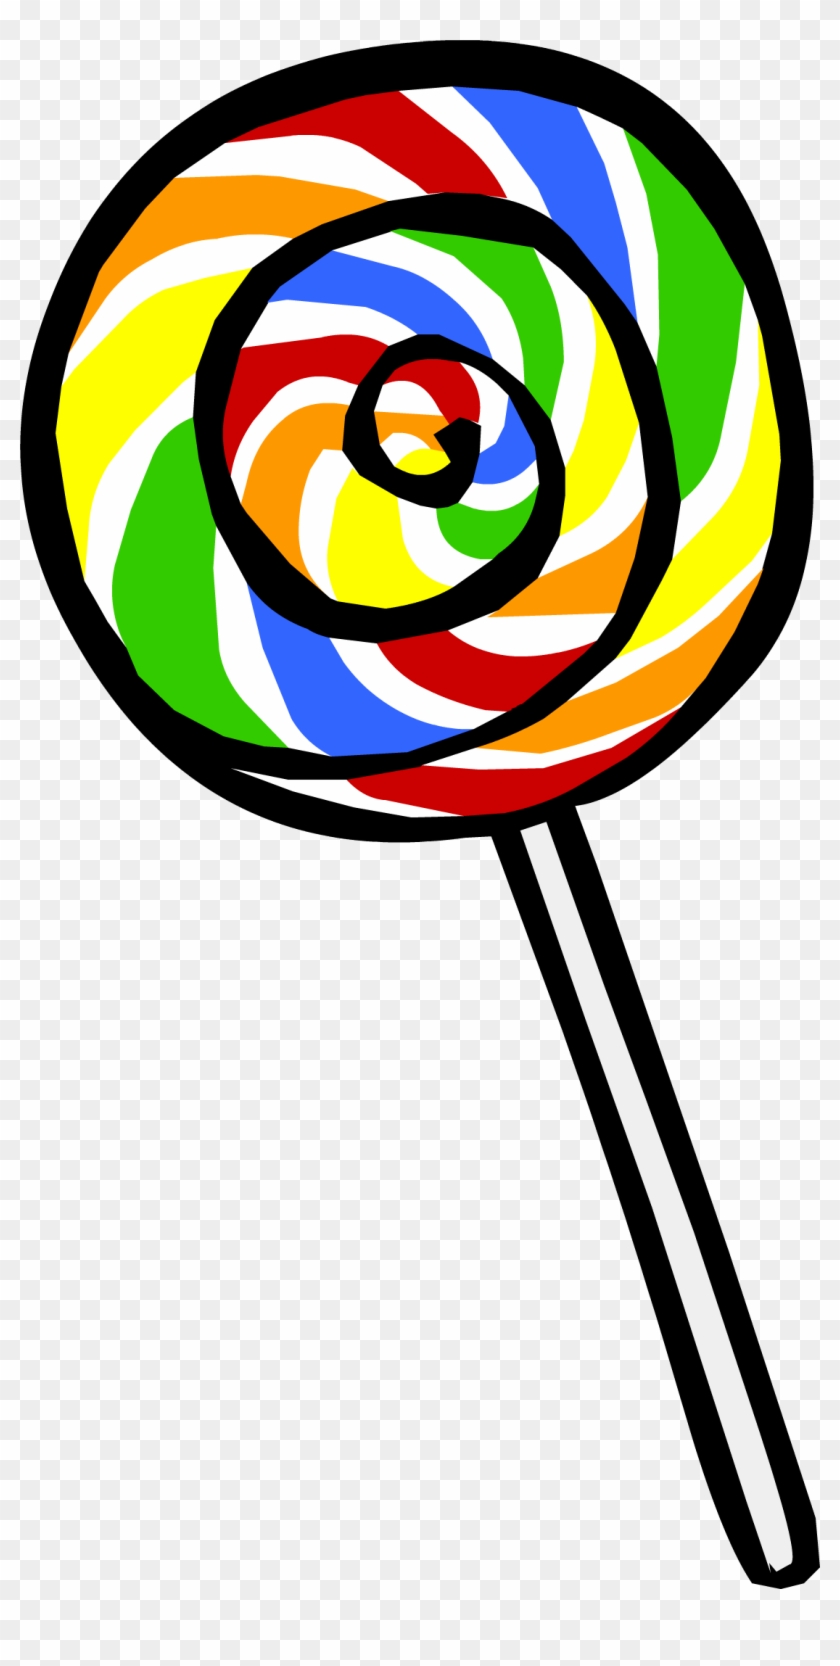 09, May 21, 2014 - Lollipop Clipart #69364